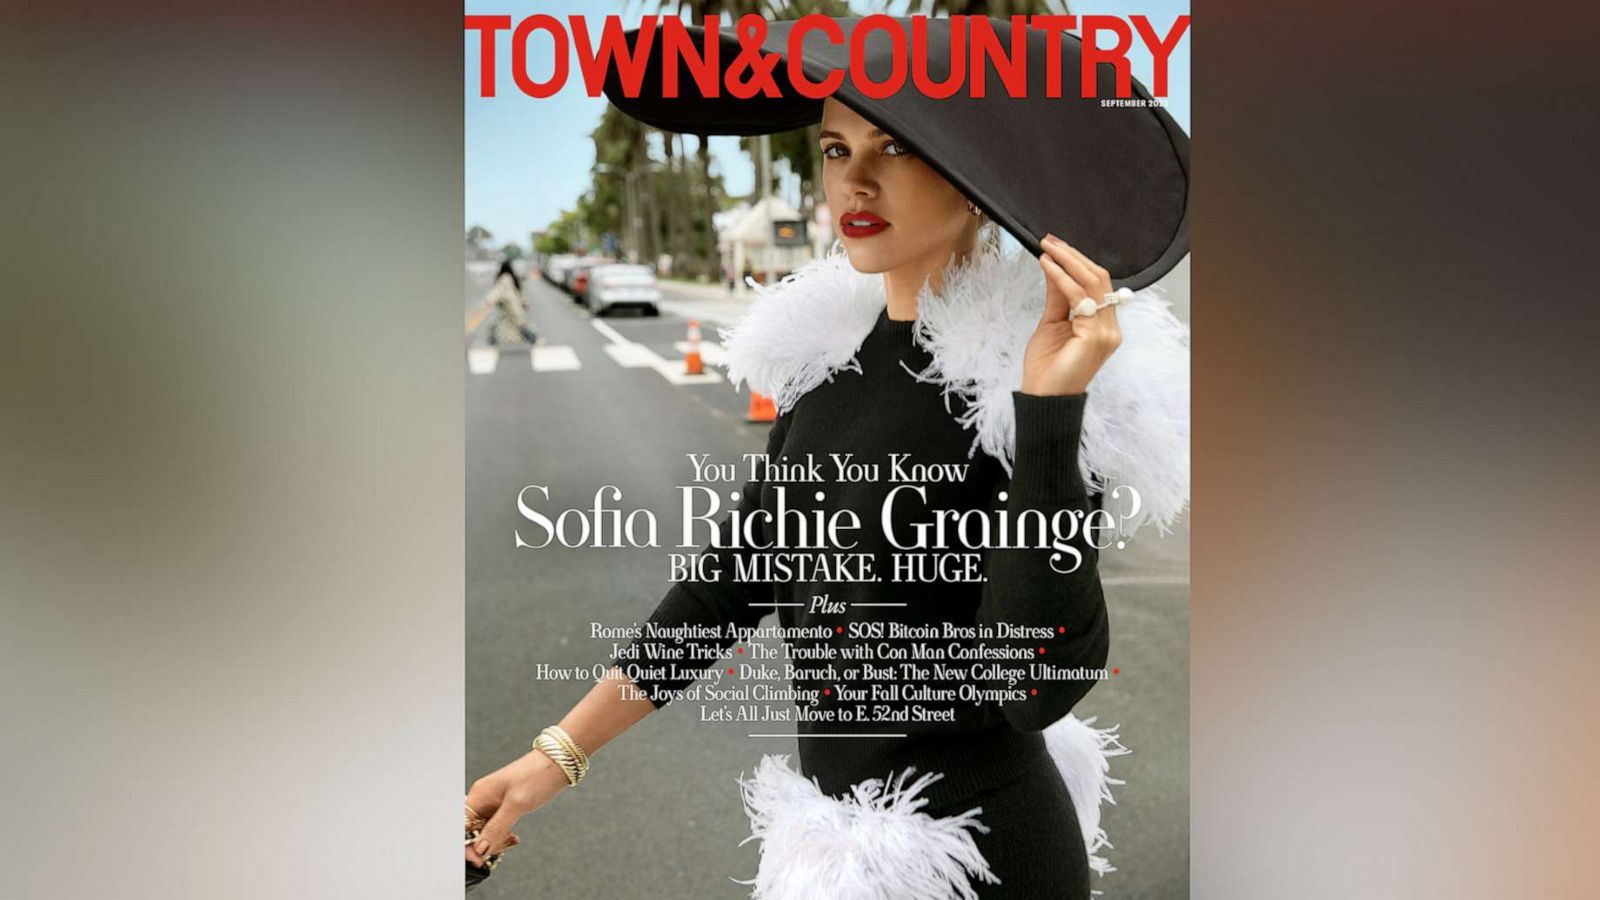 Sofia Richie talks her many wedding dresses and looks ahead to fashion line  - Good Morning America